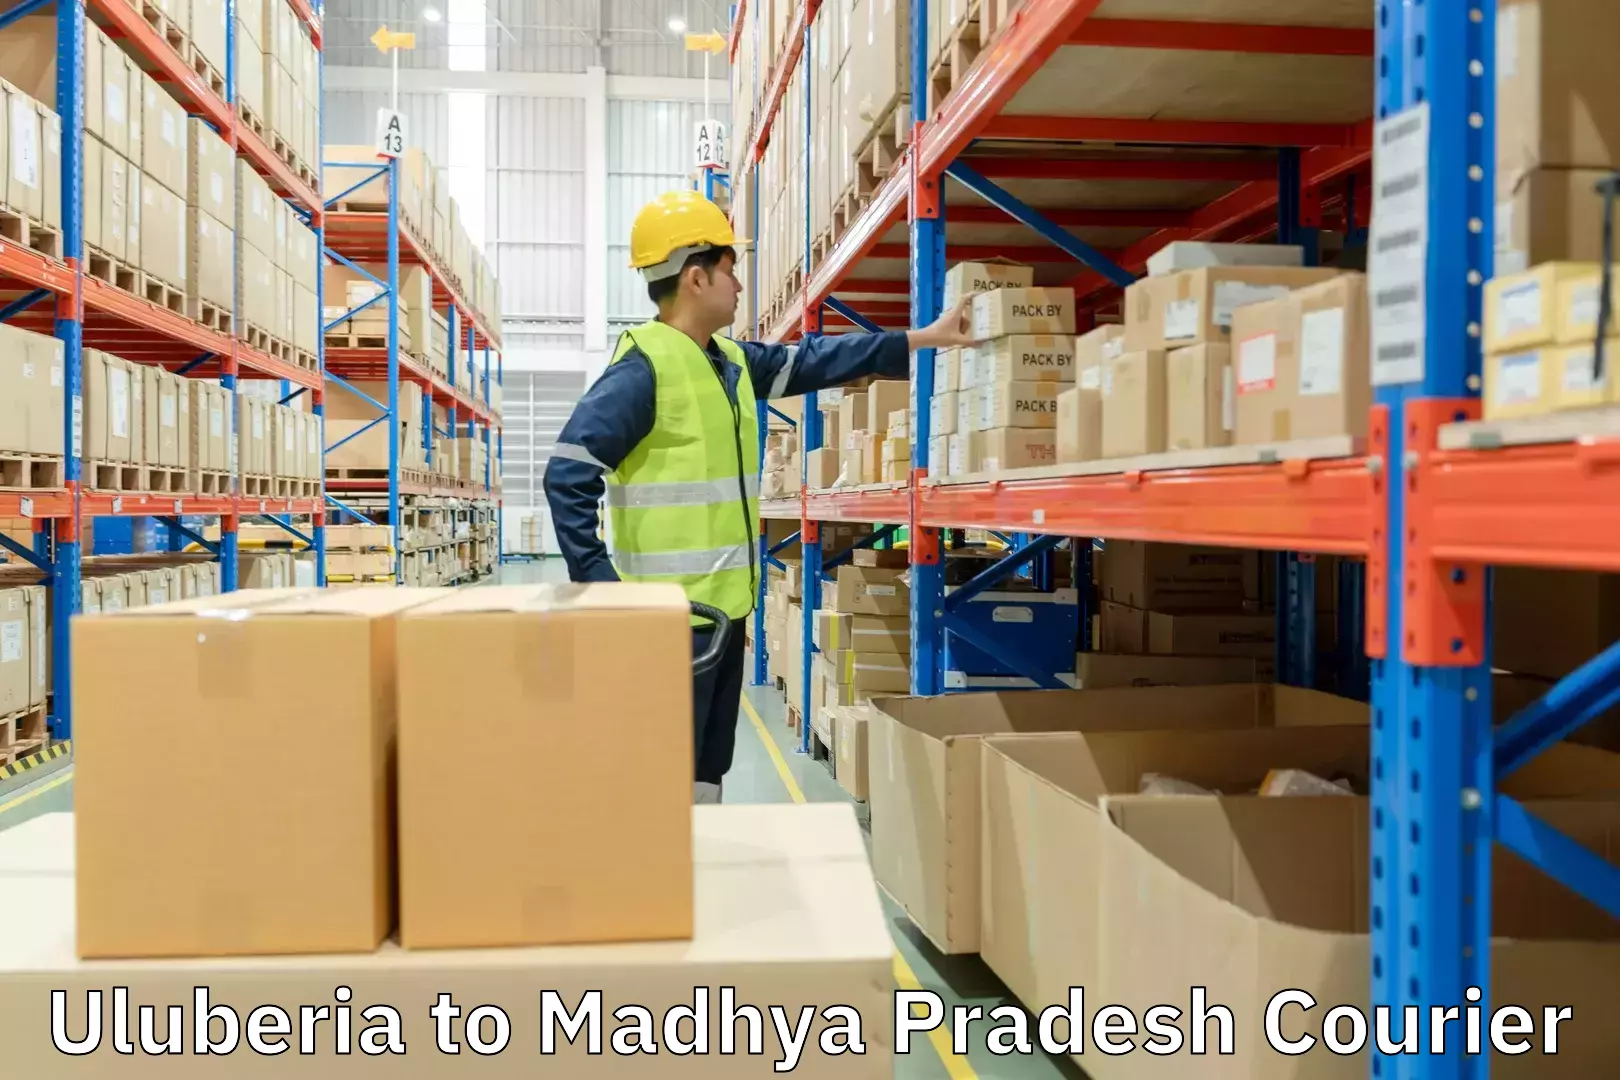 Courier service comparison Uluberia to Madhya Pradesh